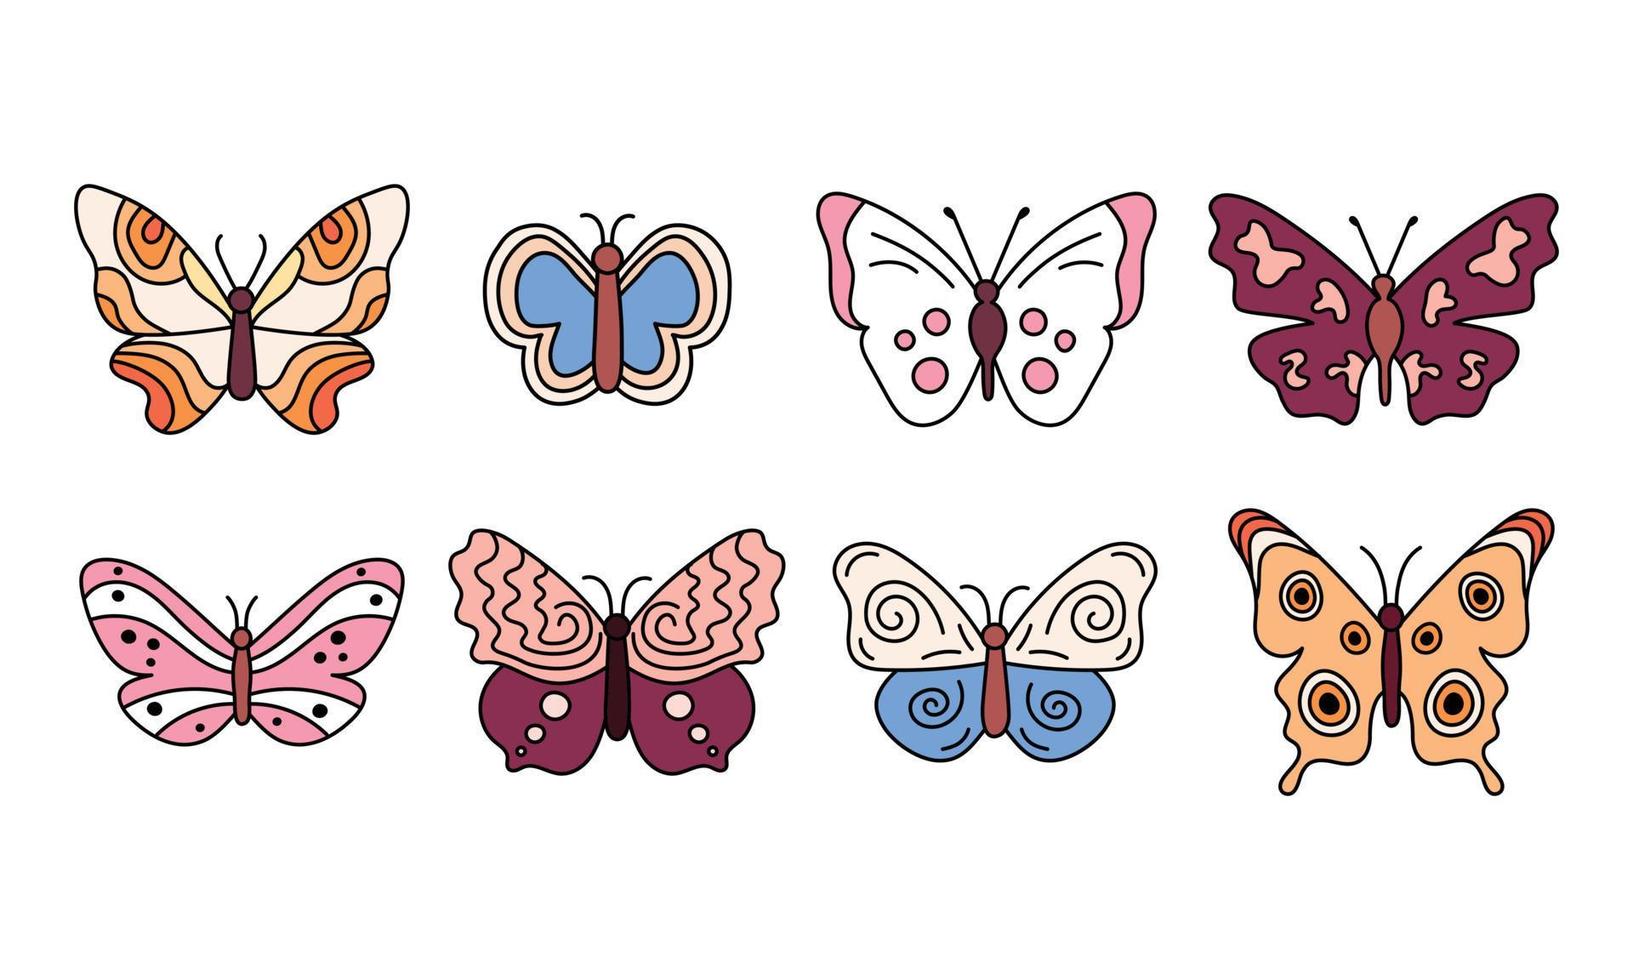 conjunto de borboletas coloridas. coleção de vetores de insetos doodle isolados. elementos de design de cores groovy em fundo branco. linda borboleta de contorno